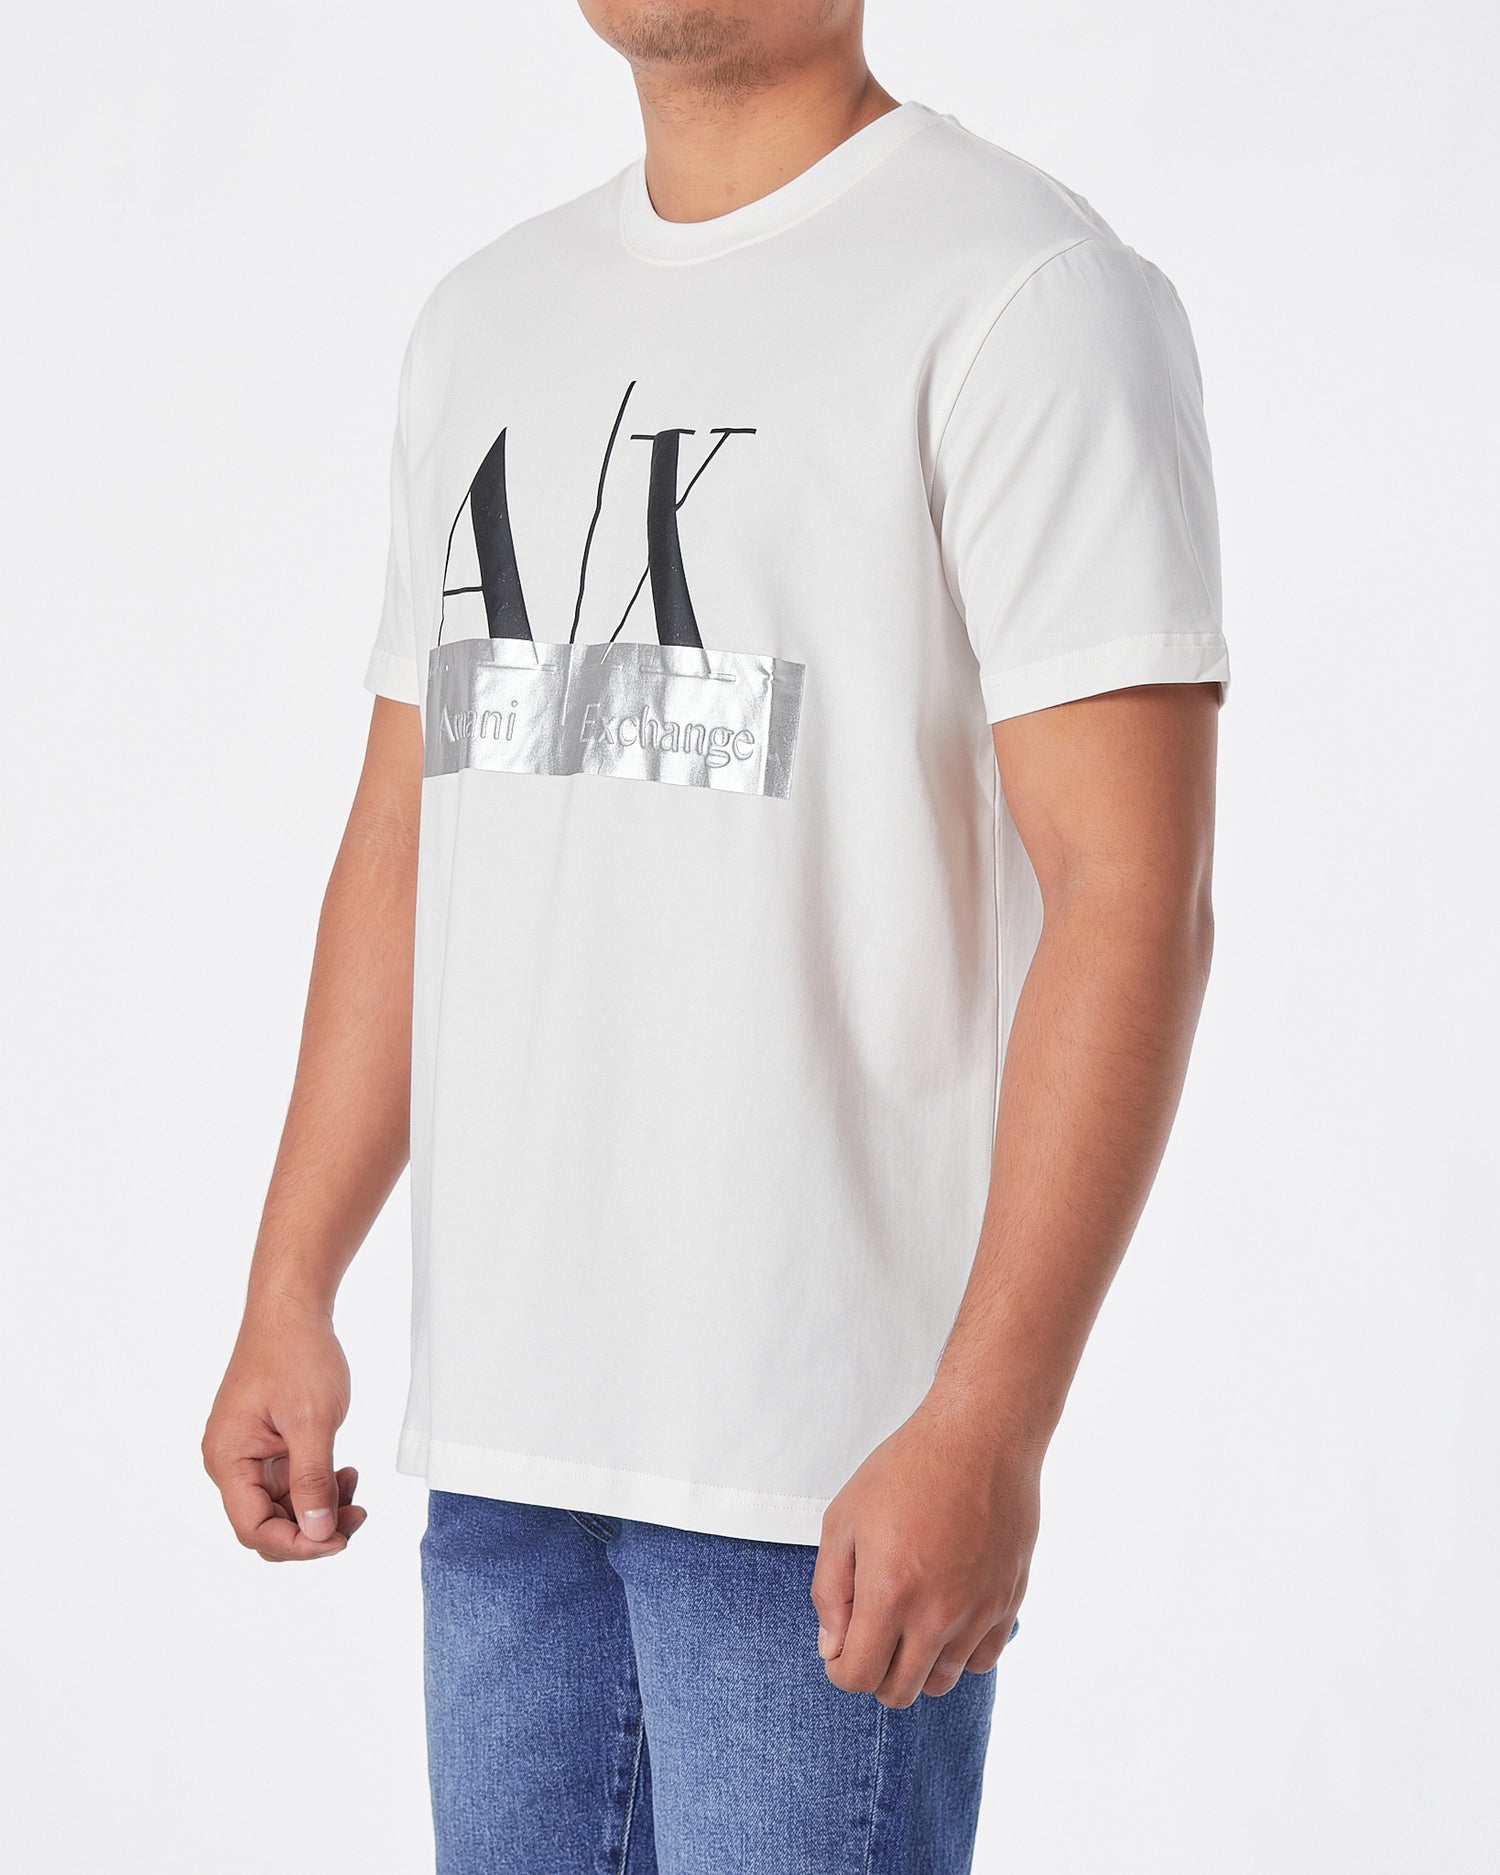 ARM AX Logo Printed Men White T-Shirt 16.90